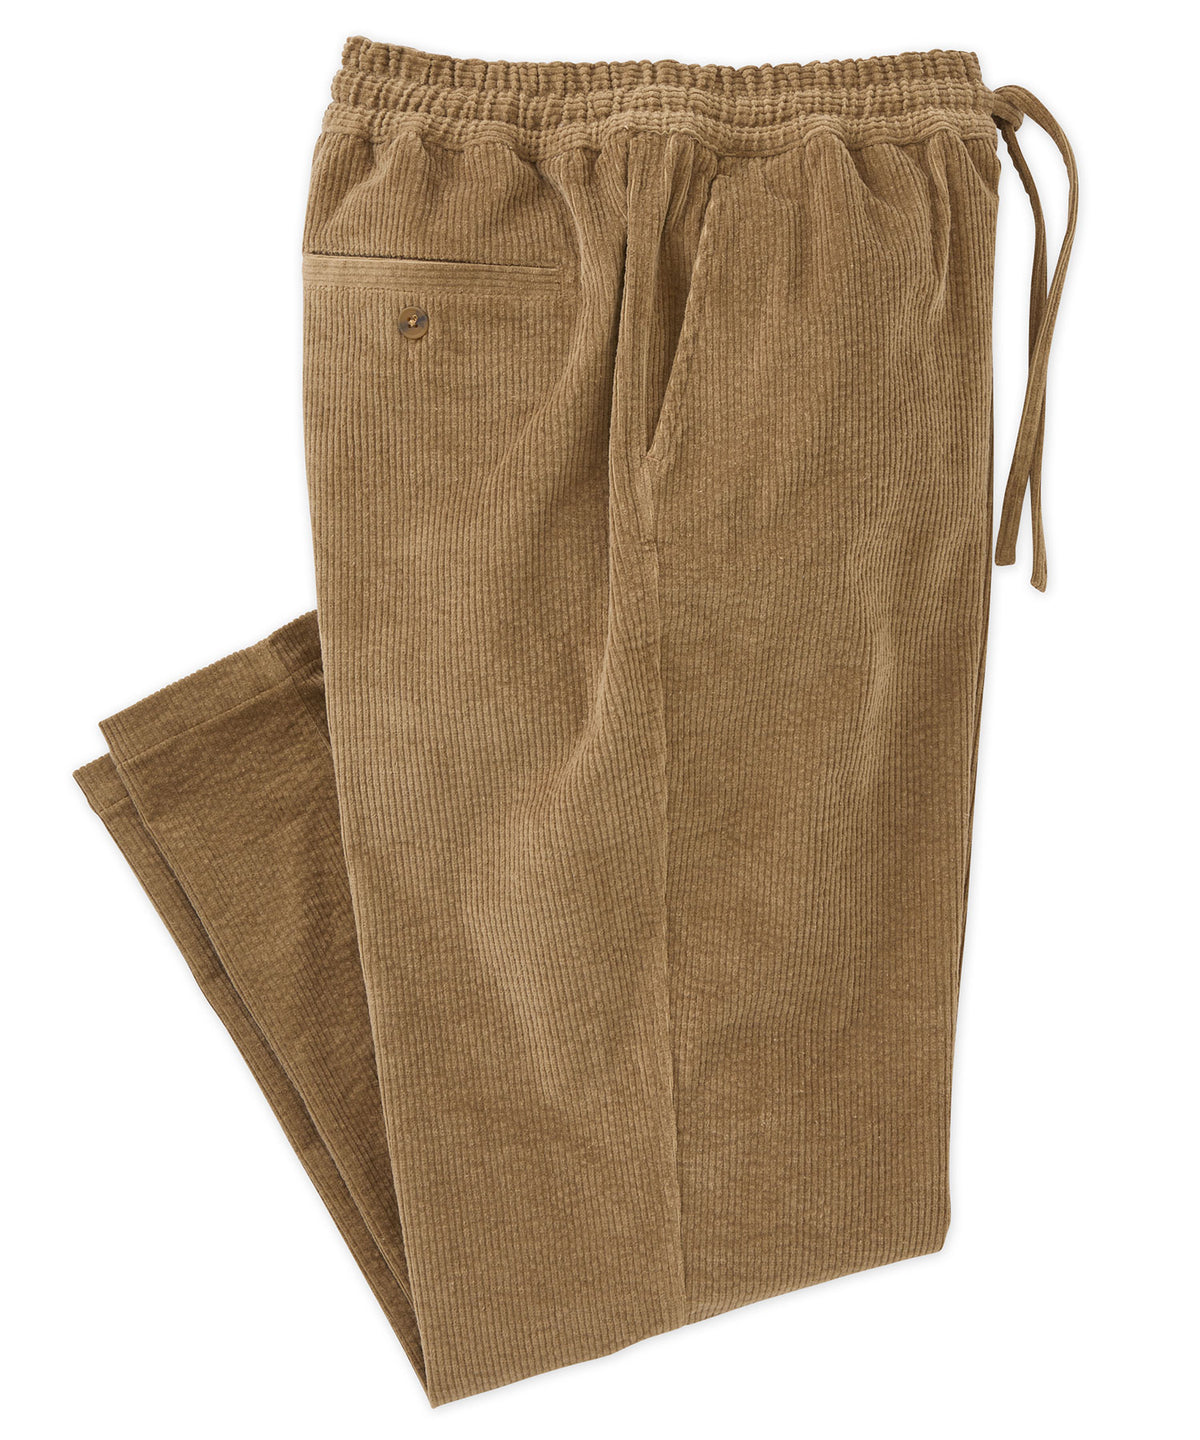 Pantaloni in velluto a coste elasticizzati in vita elastica Westport Lifestyle, Men's Big & Tall